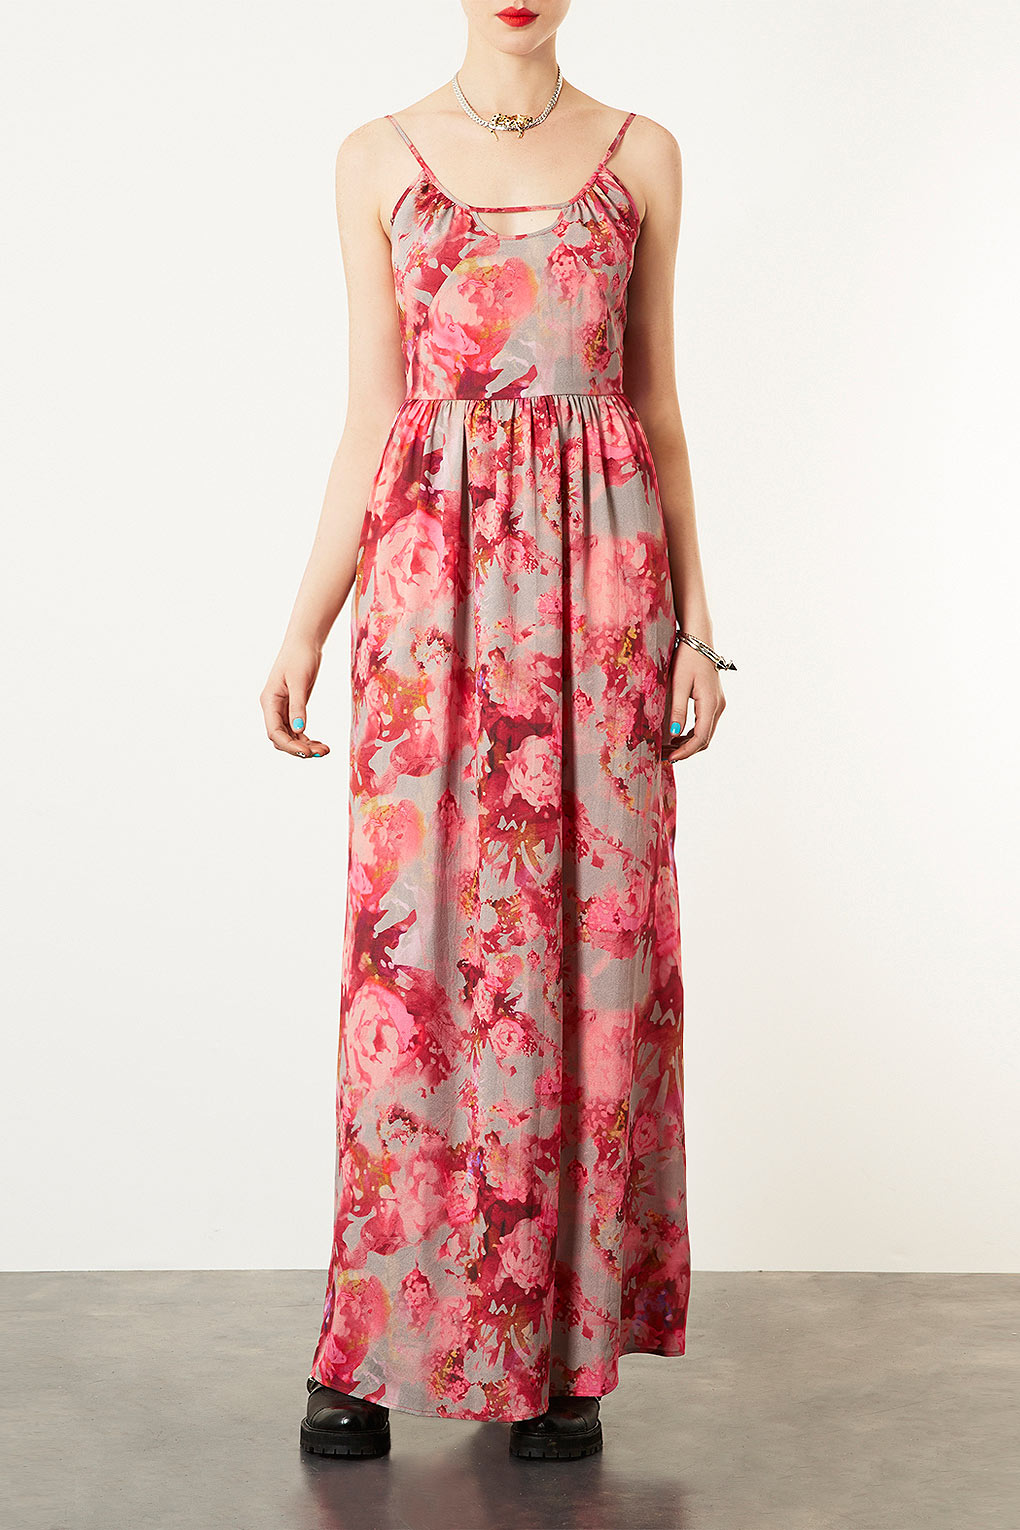 Lyst - Topshop Blur Floral Maxi Dress in Pink